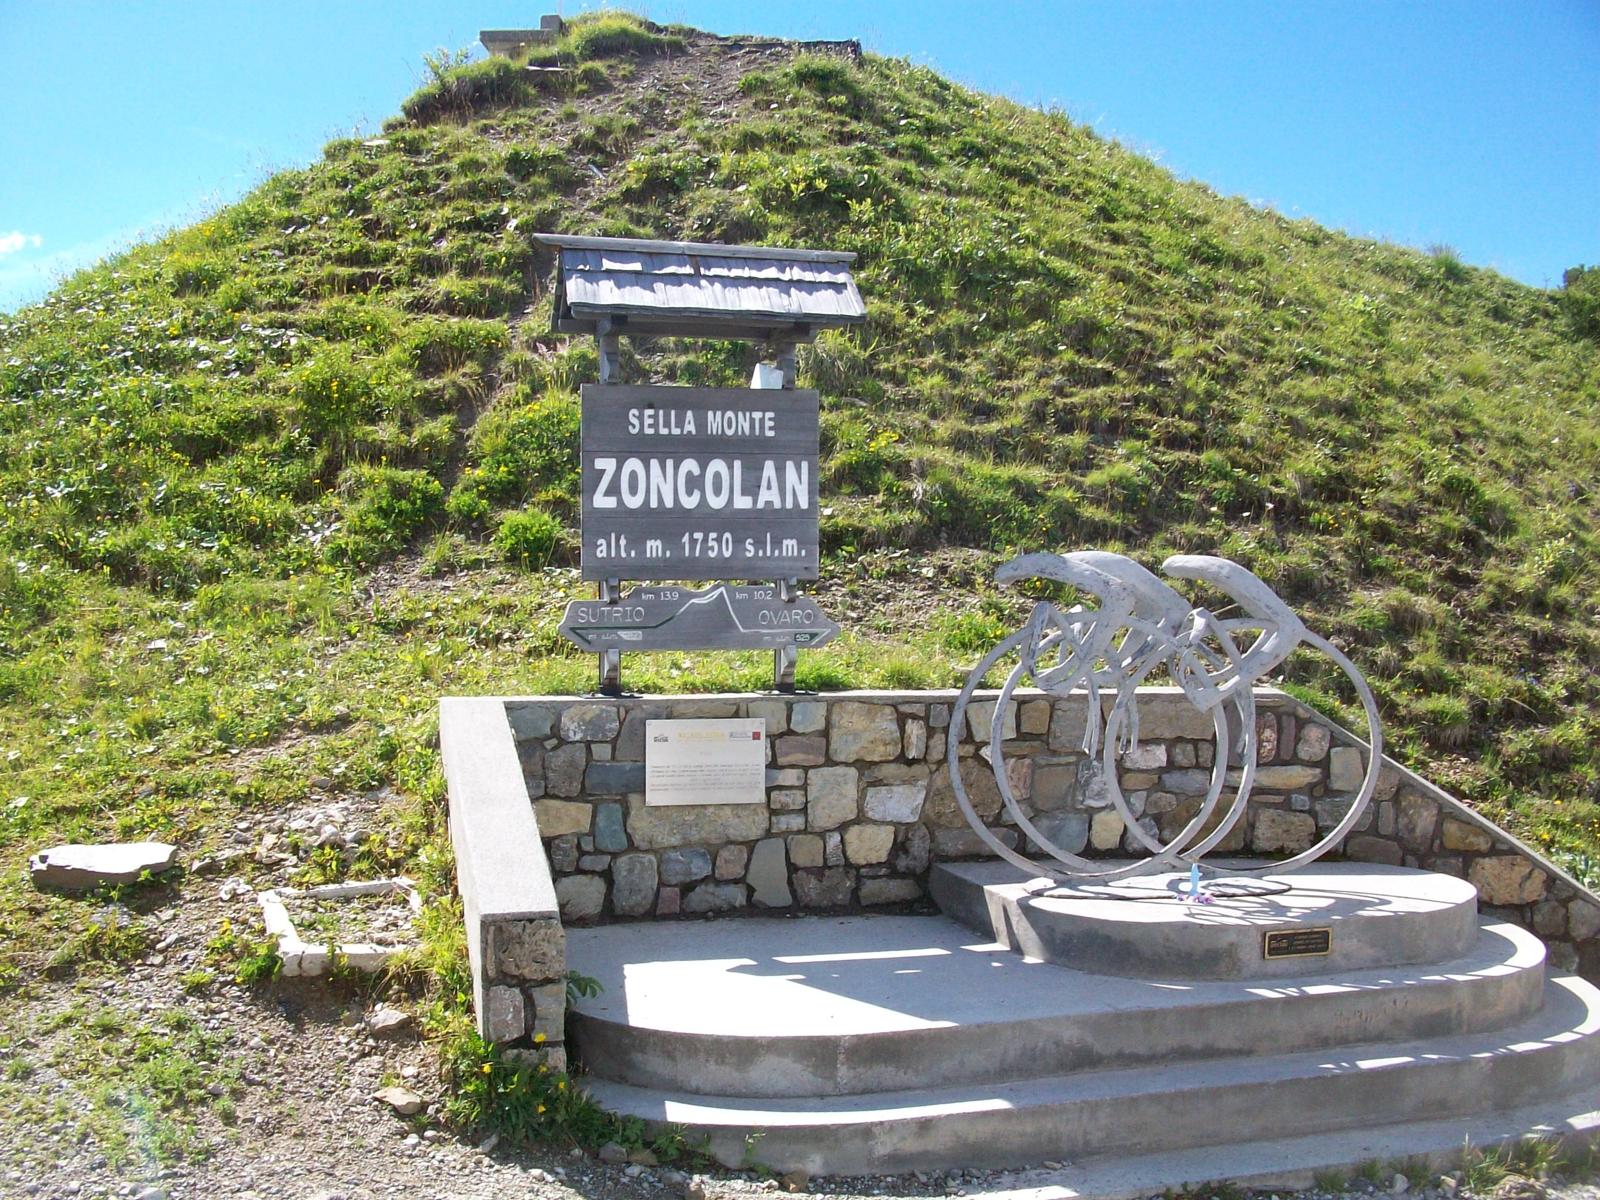 Monte zoncolan